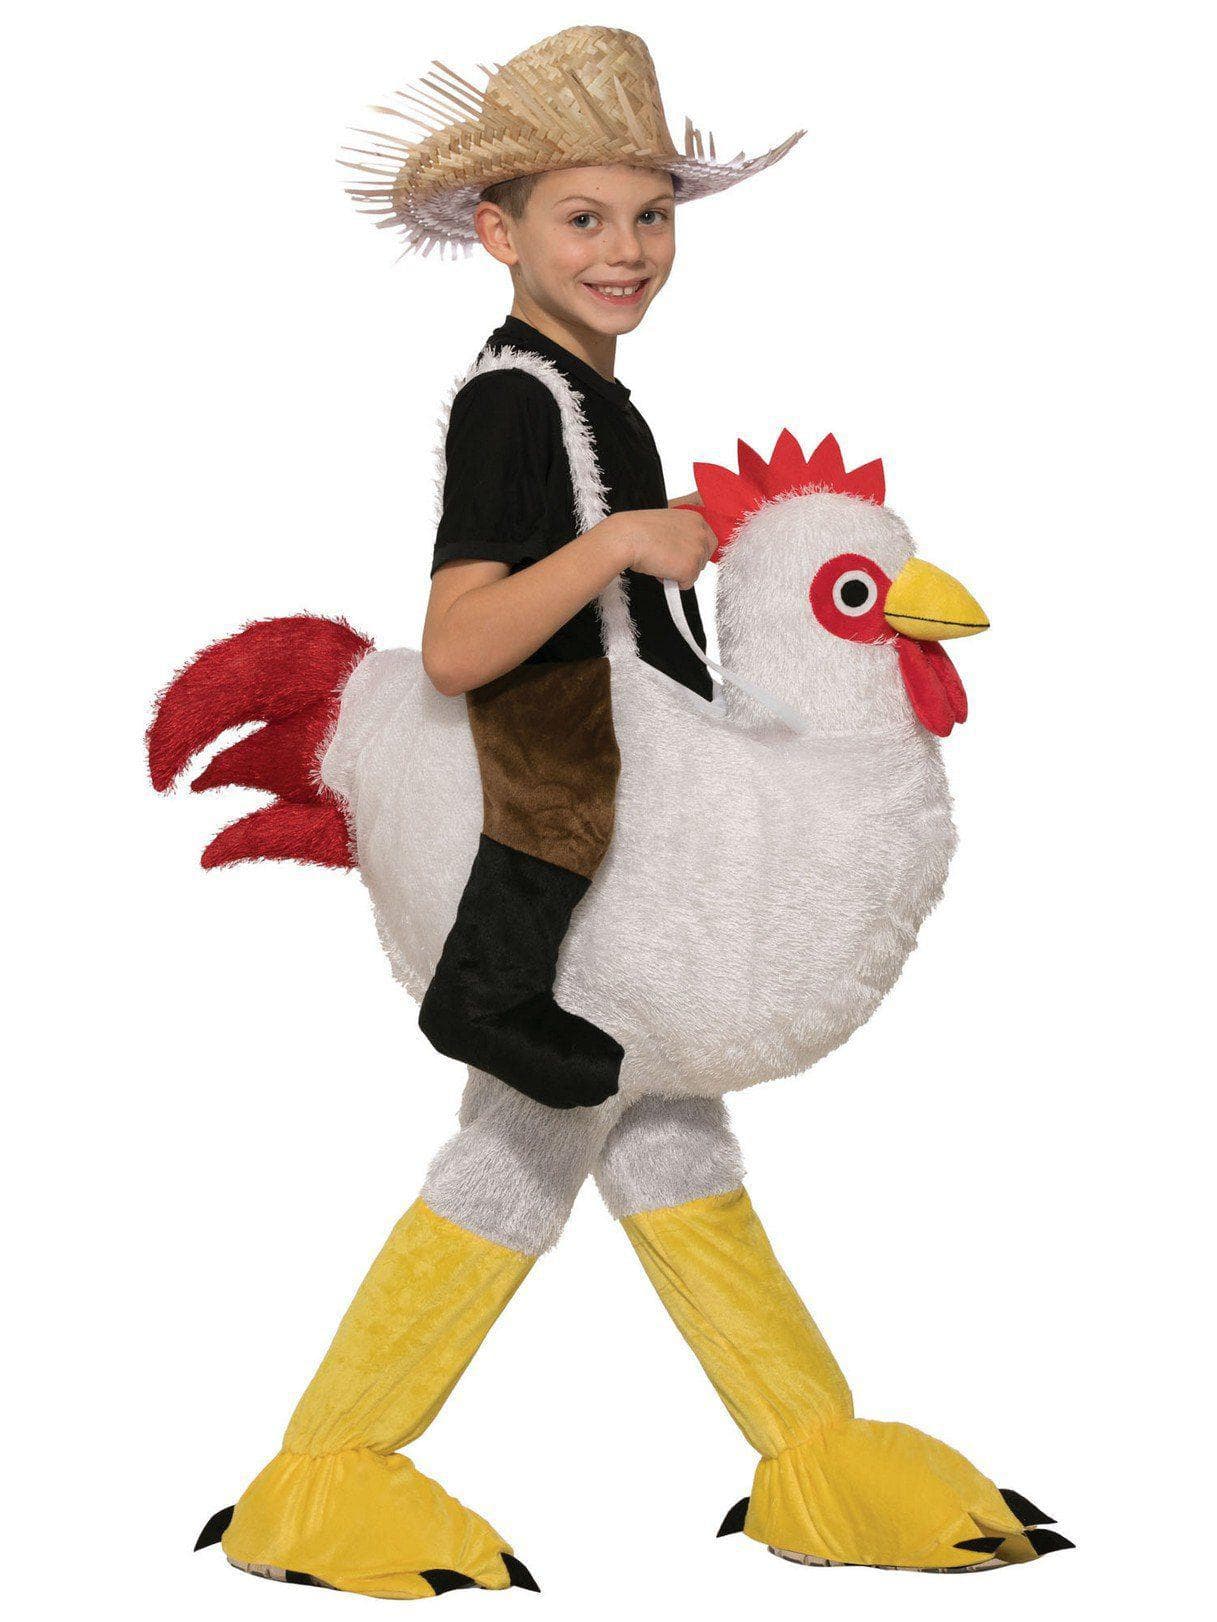 Kids' Ride In Chicken Costume - costumes.com